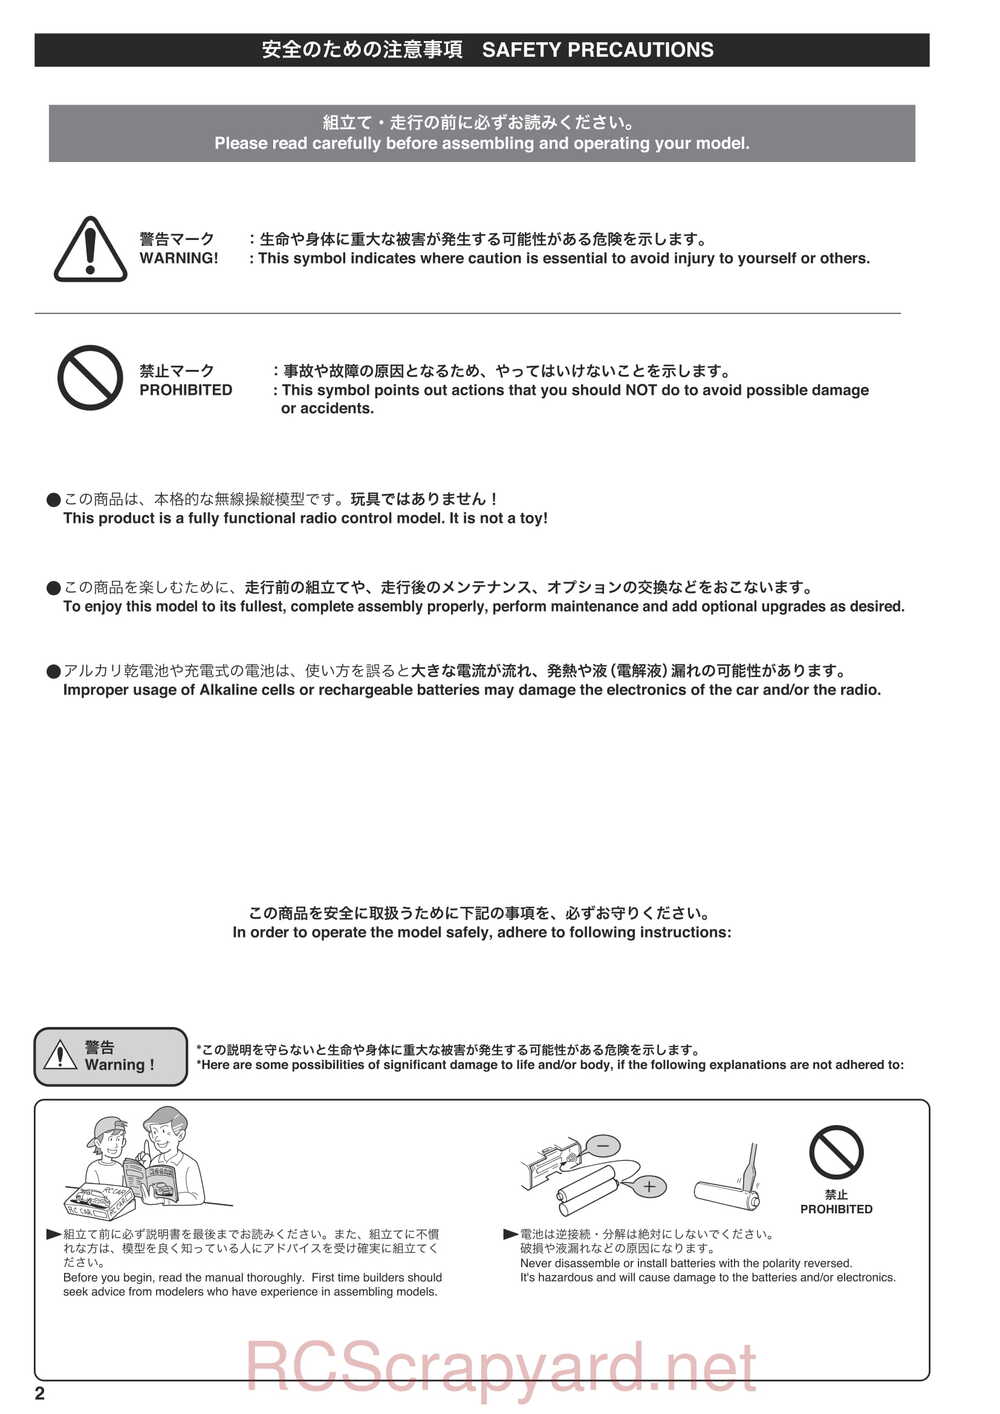 Kyosho - 31007 - KF01 - Manual - Page 02